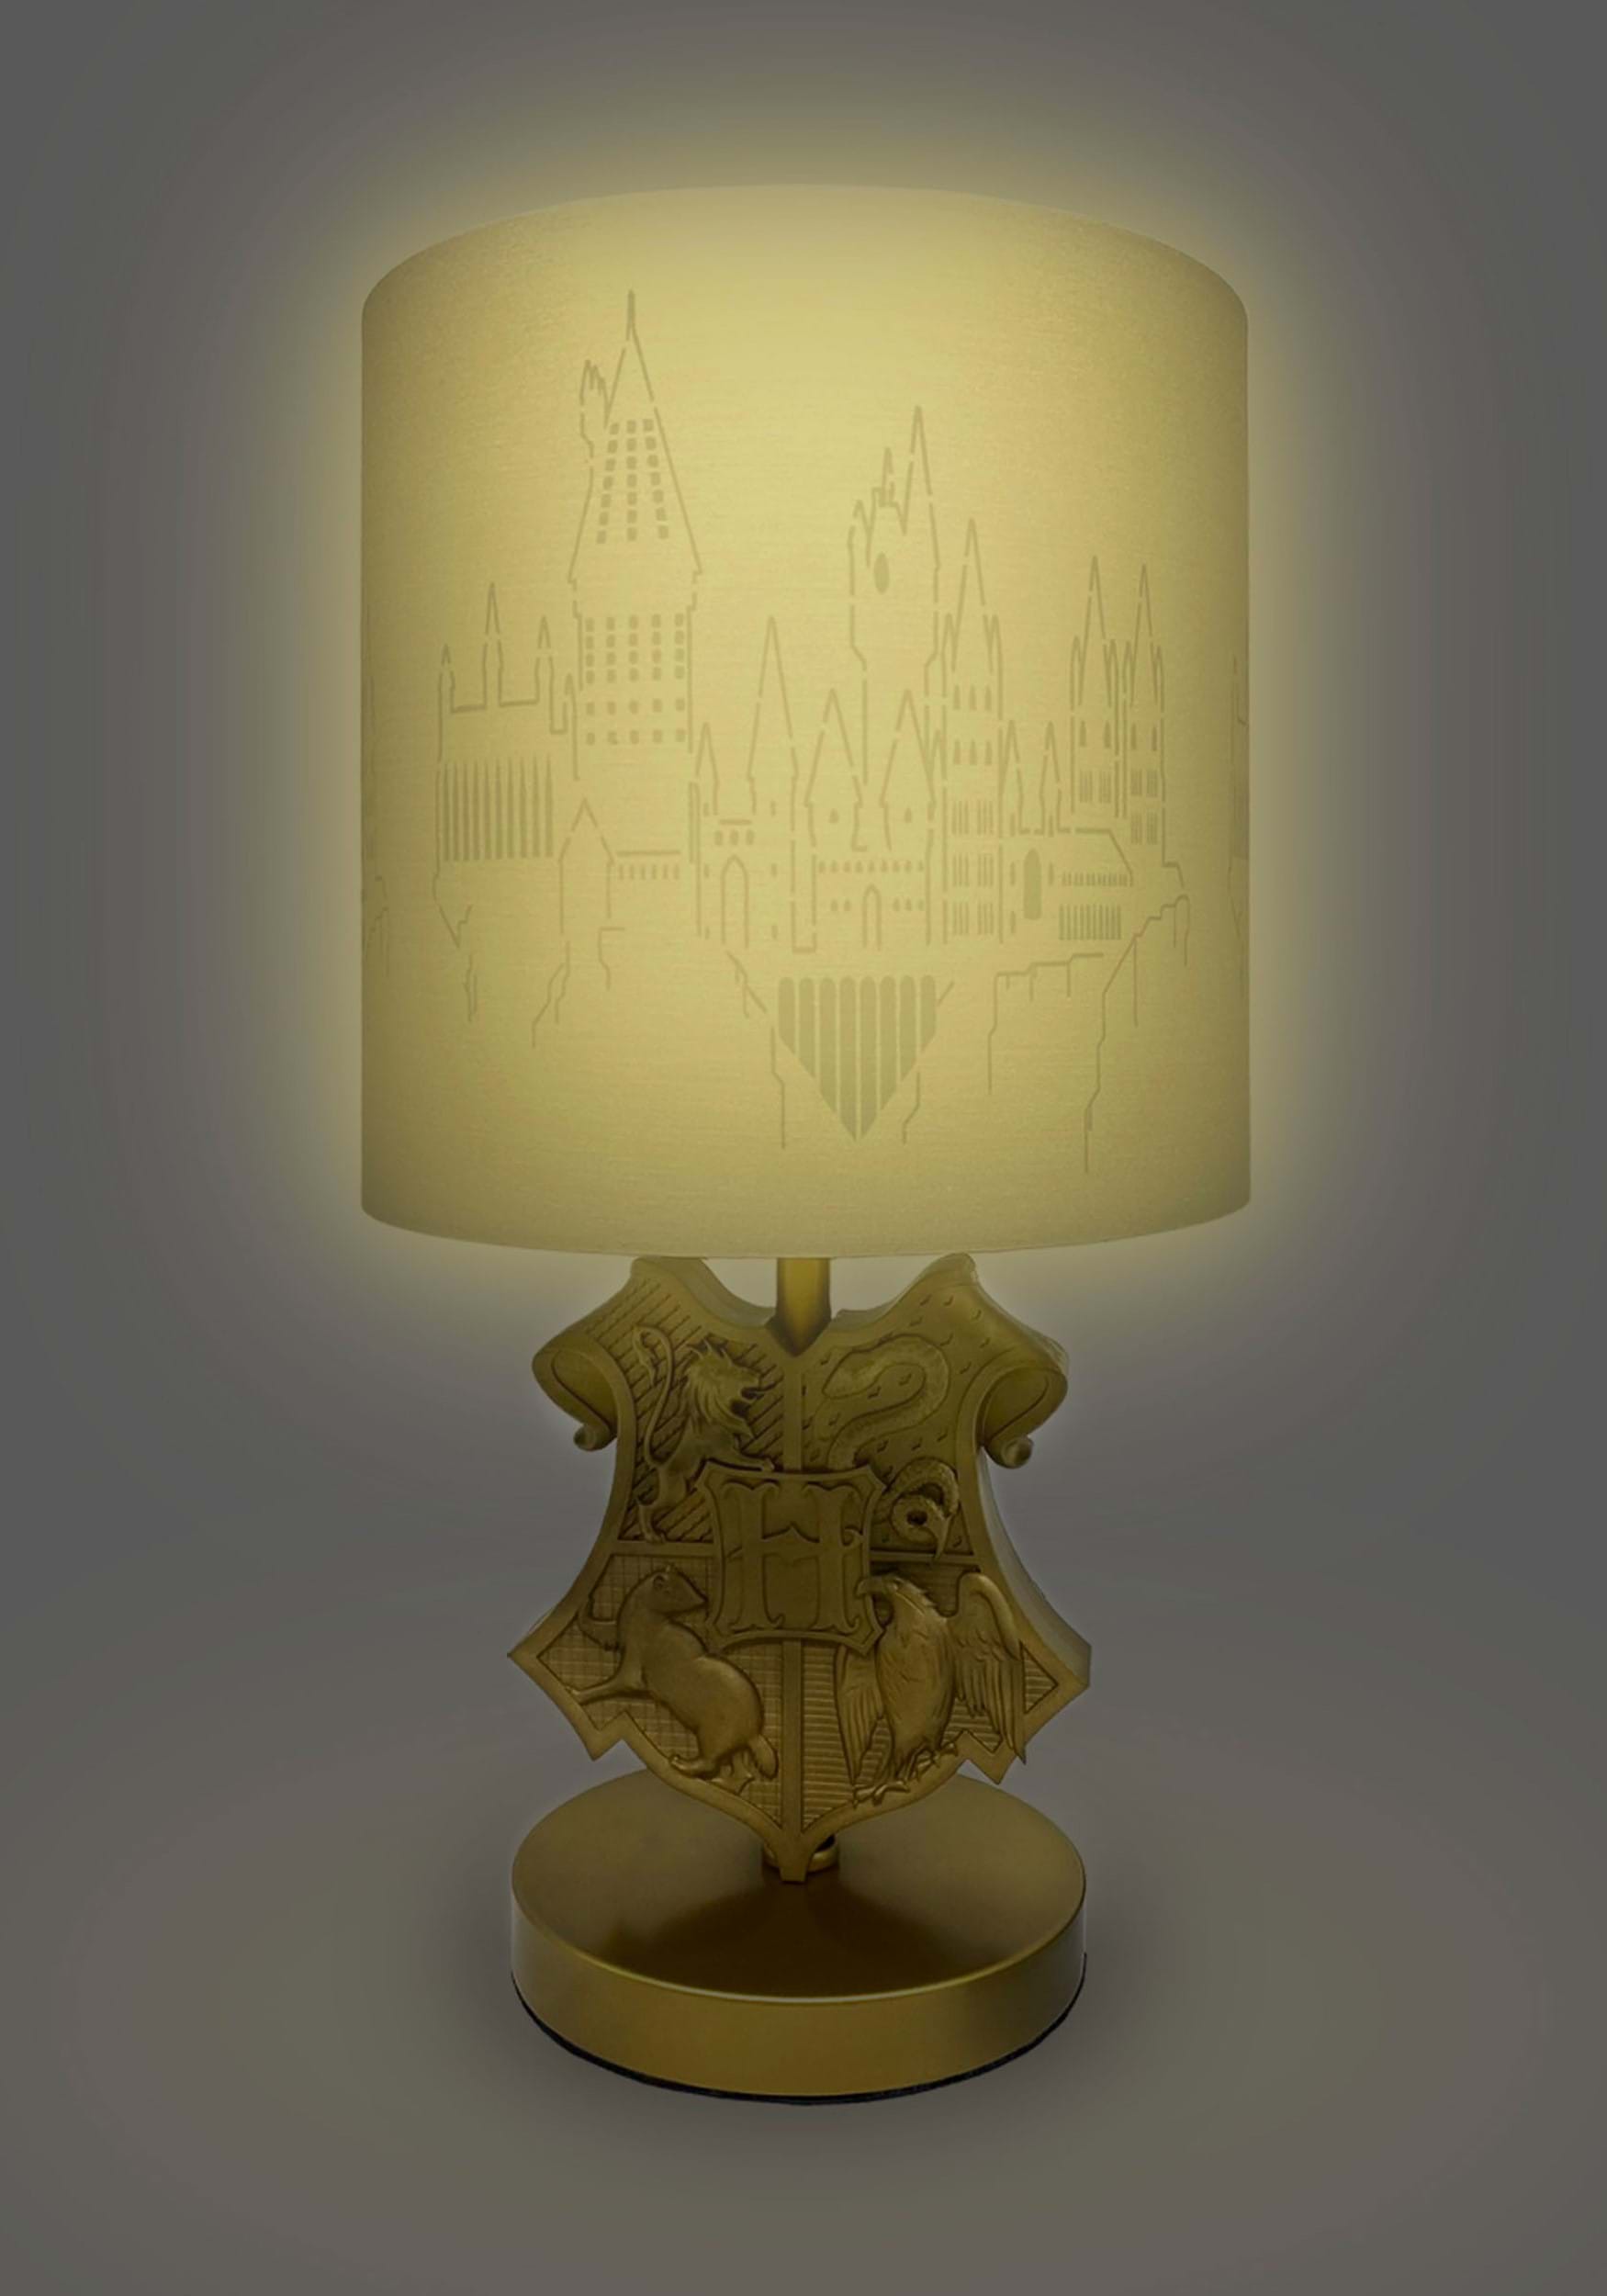 Harry Potter Hogwarts Lamp